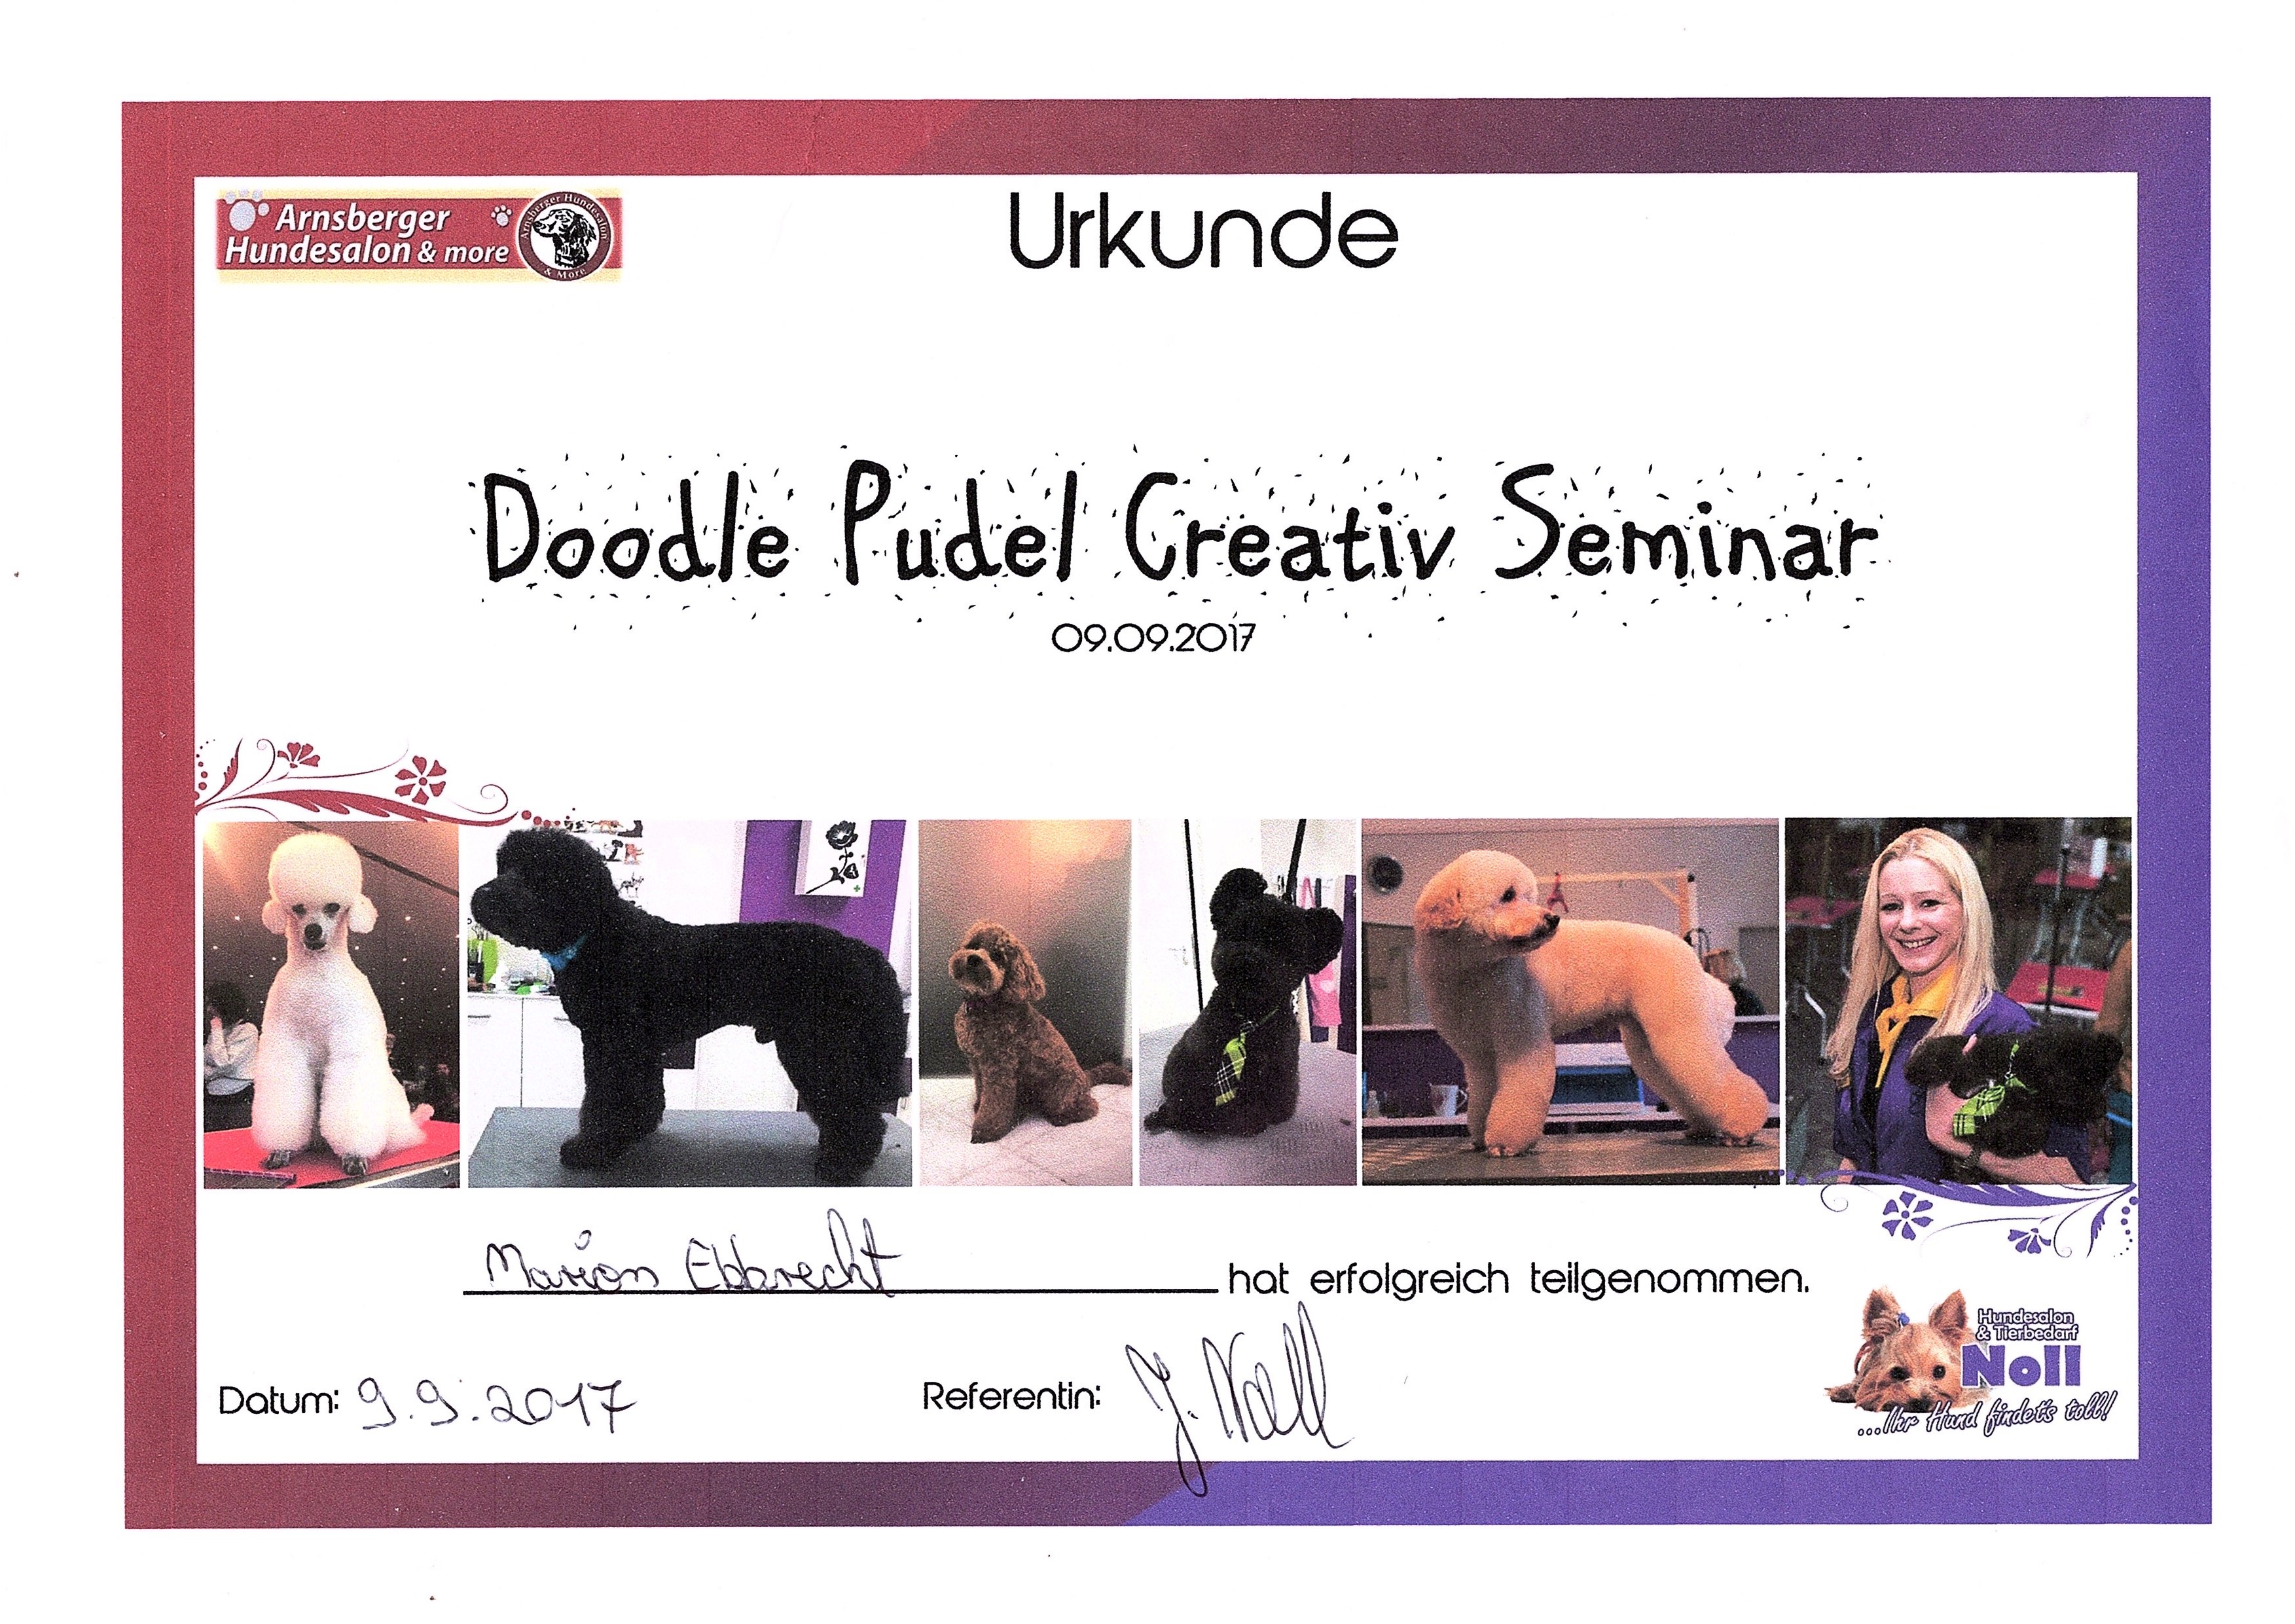 Doodle Pudel Creativ Seminar - 09.09.2017